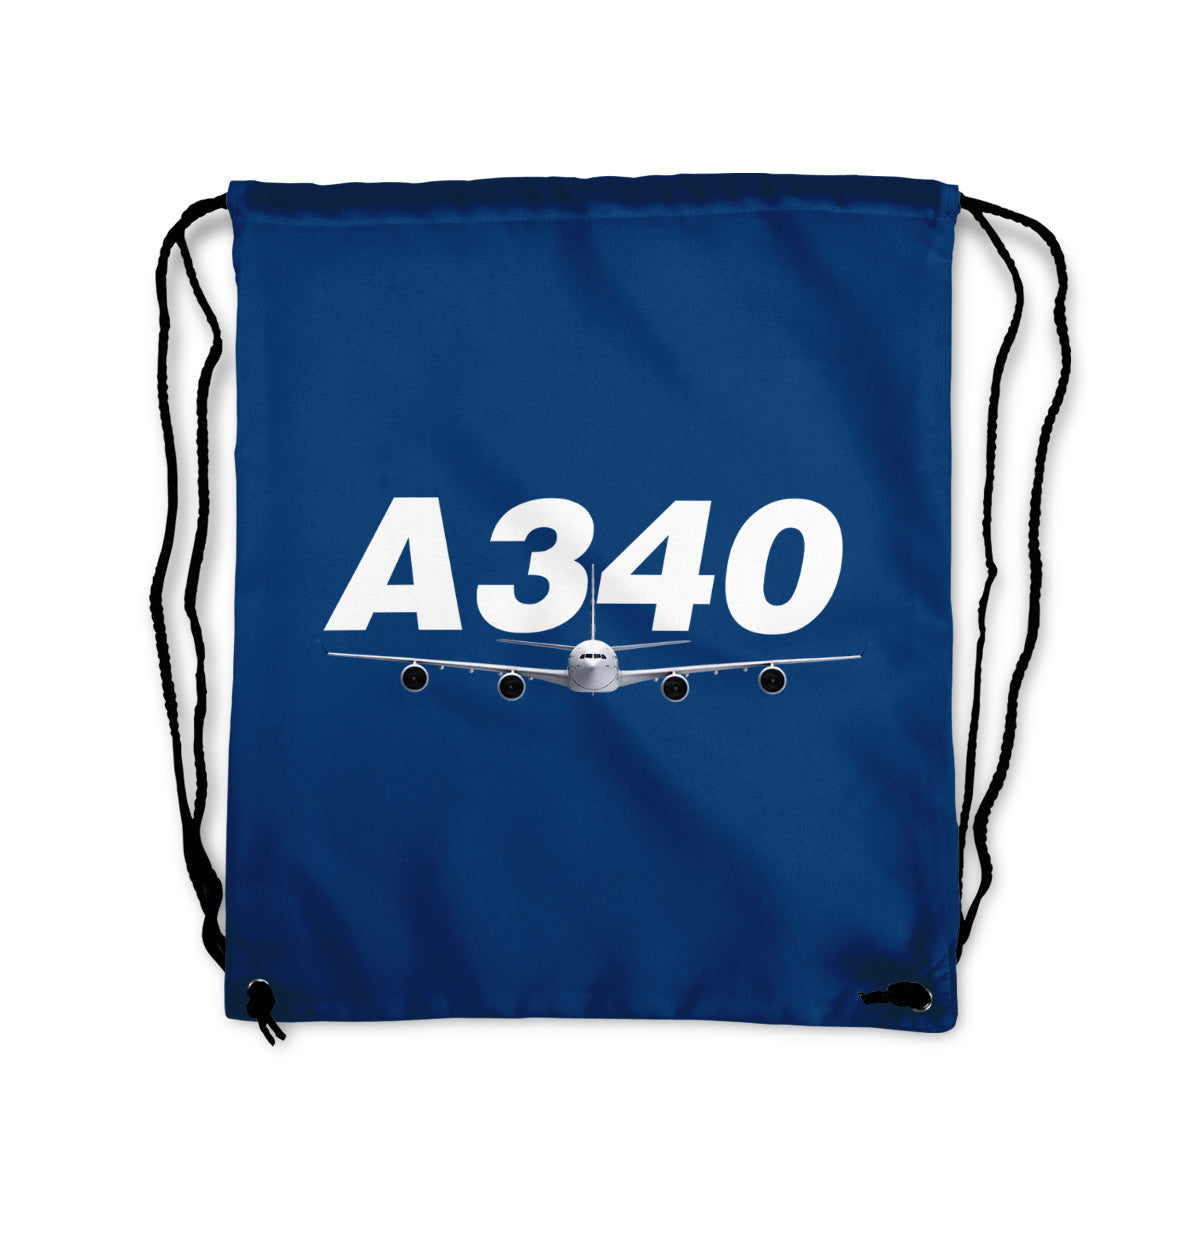 Super Airbus A340 Designed Drawstring Bags